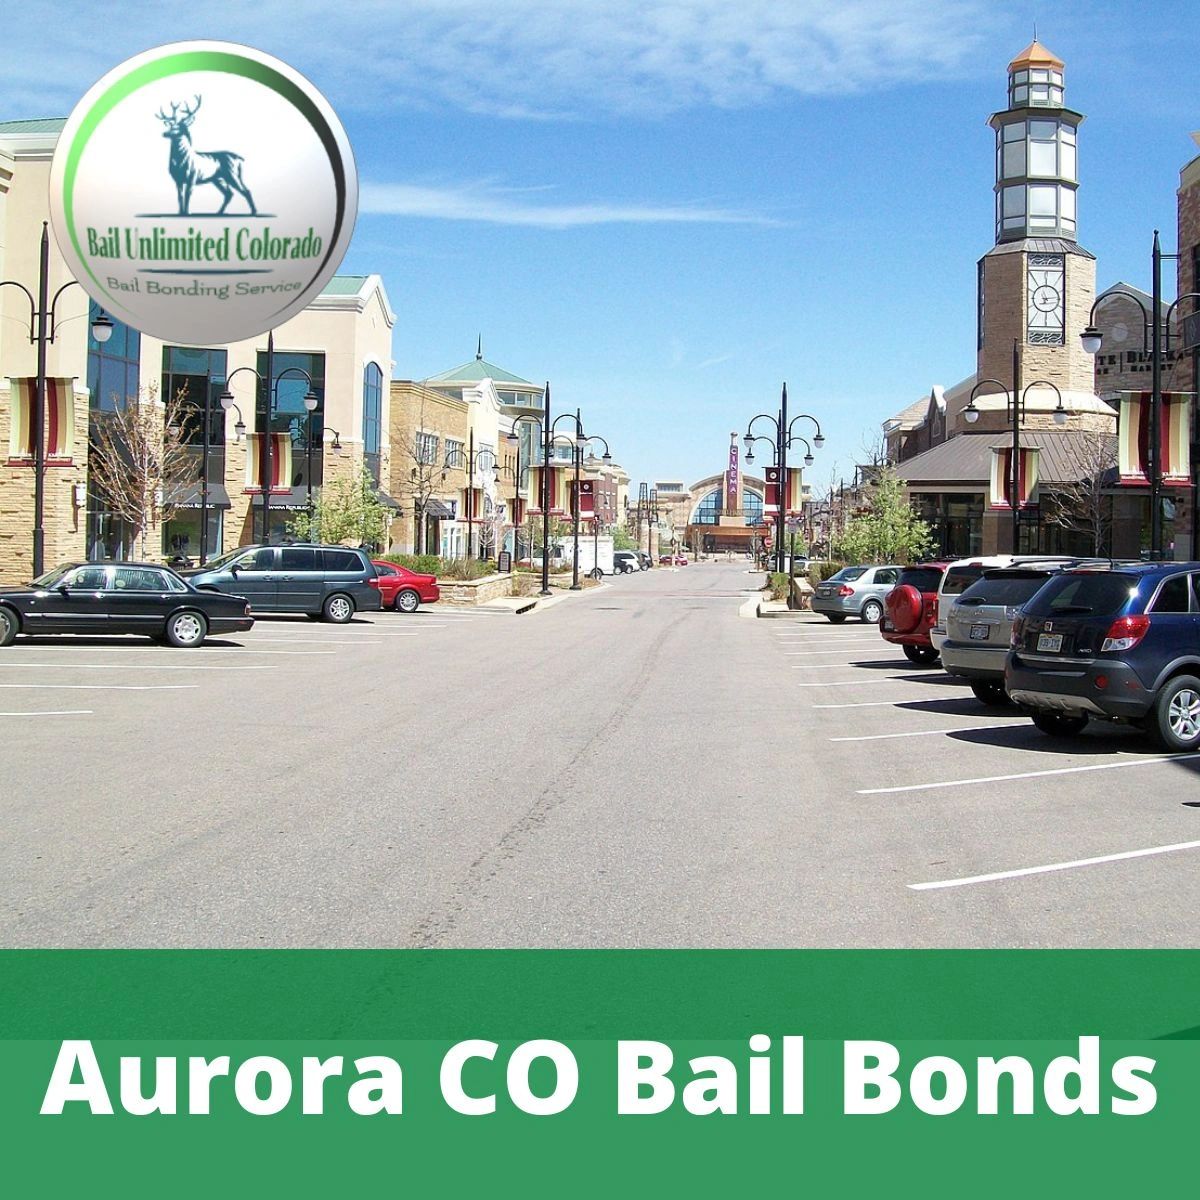 Aurora CO Bail Bonds 80047  39.70541, -104.79154 Bail Unlimited Colorado  #AuroraCOBailBonds 